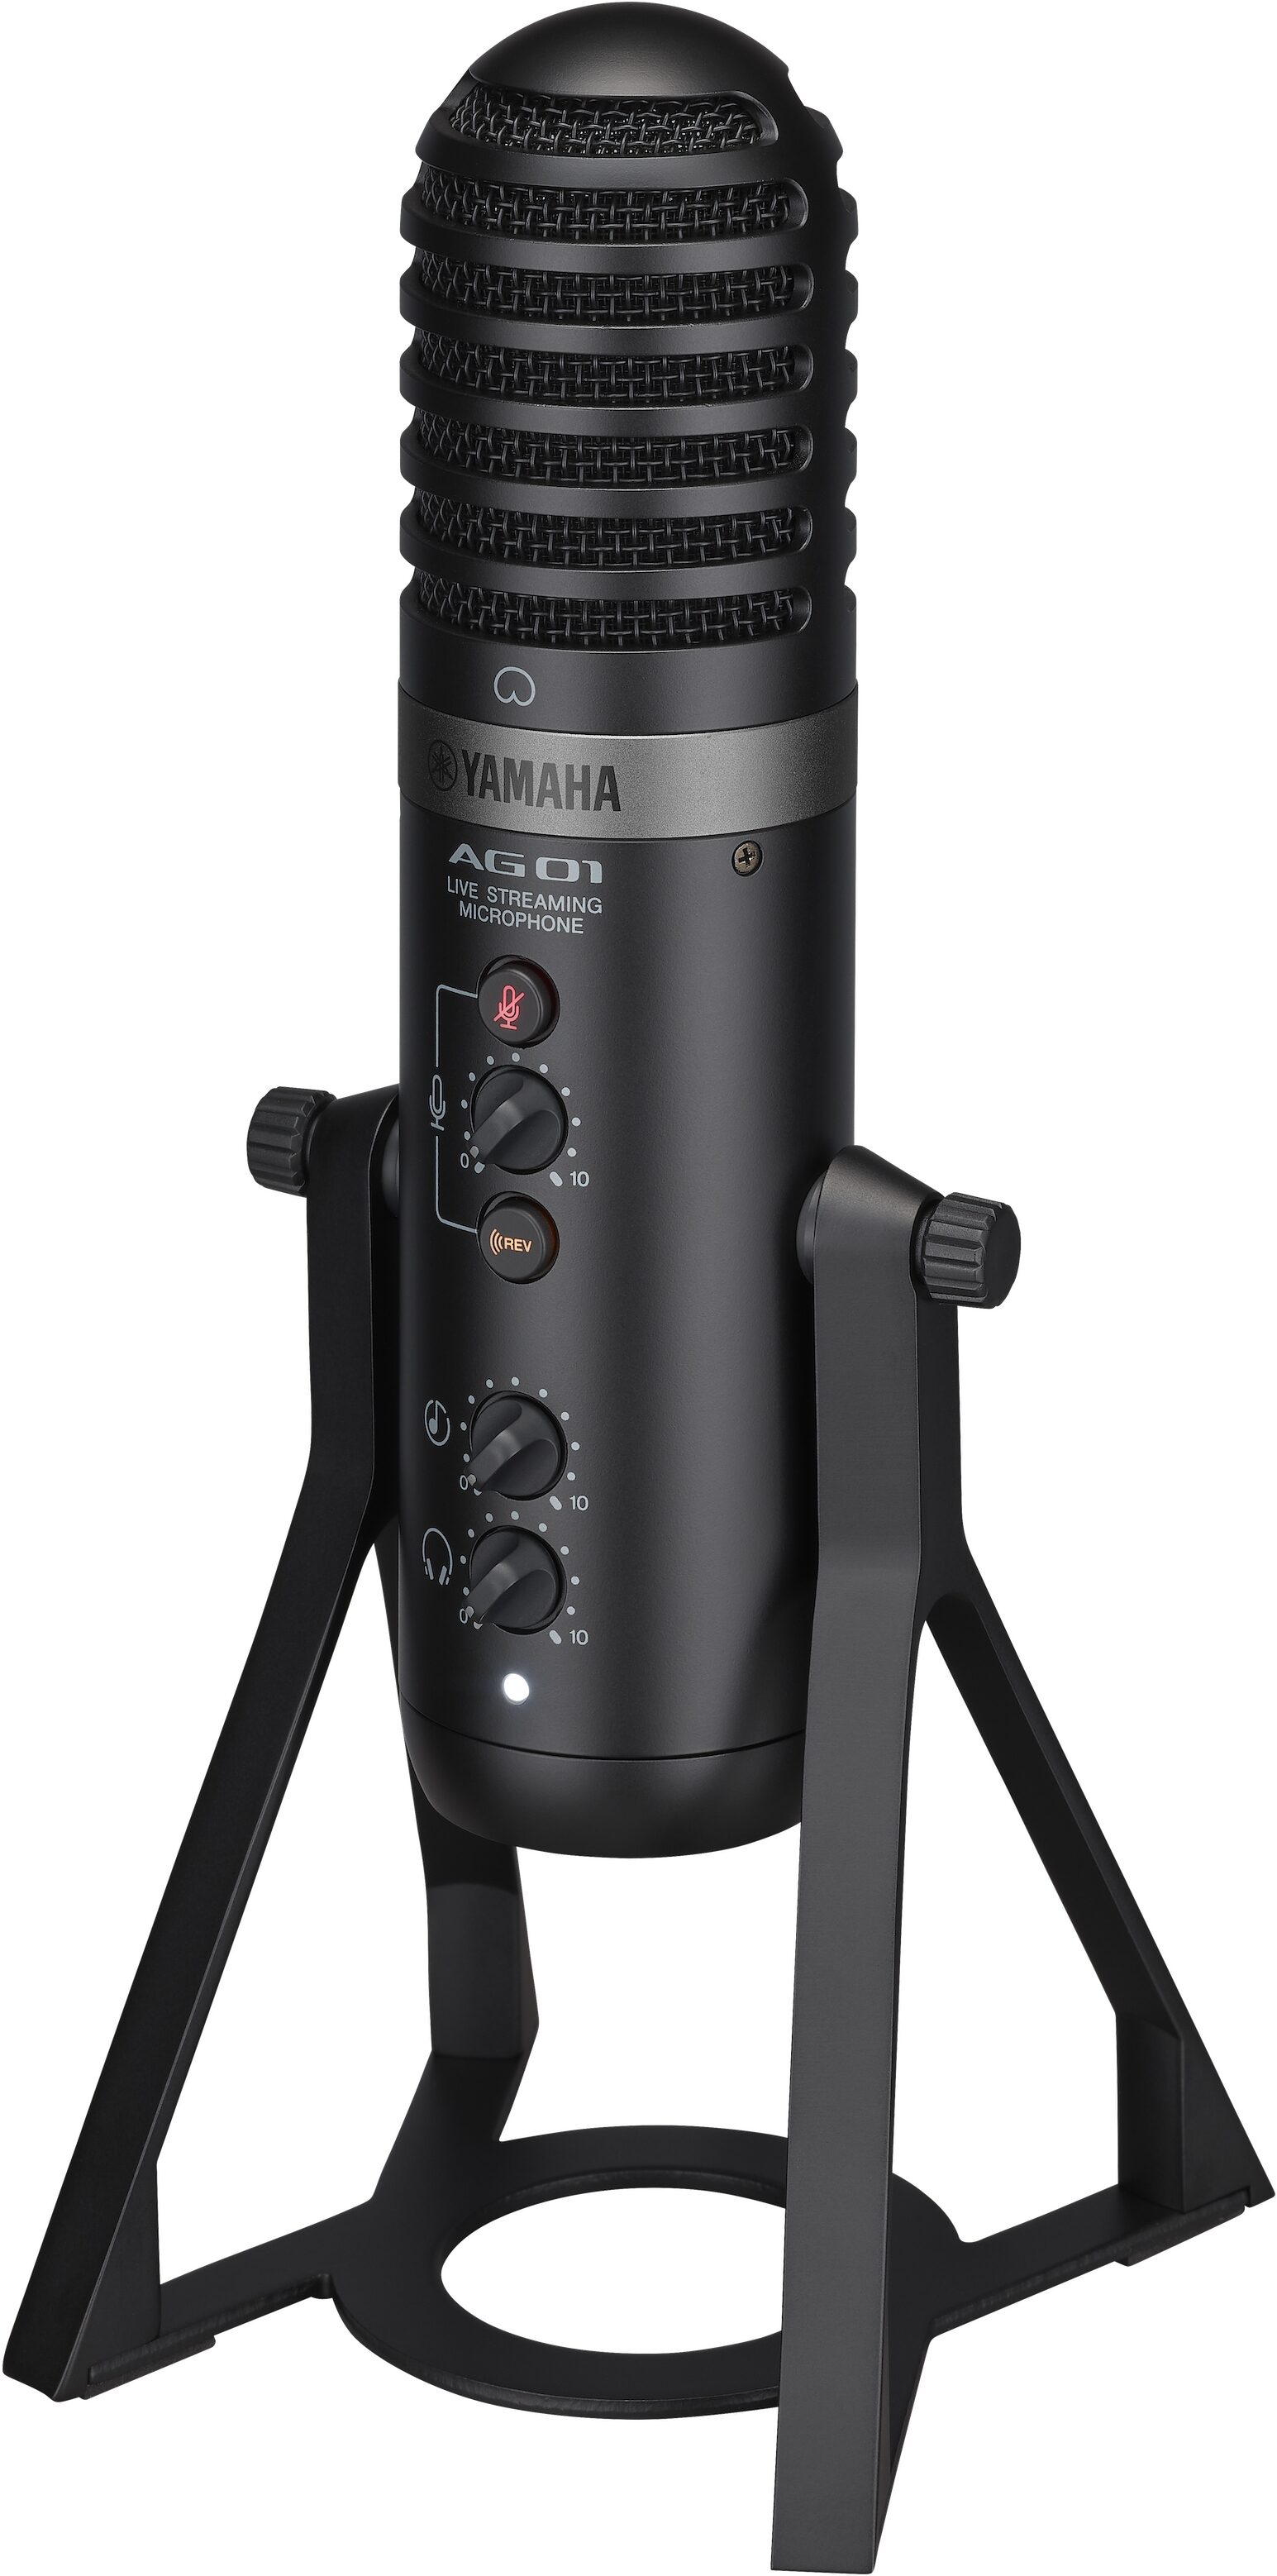 Yamaha AG01 Livestreaming USB Microphone